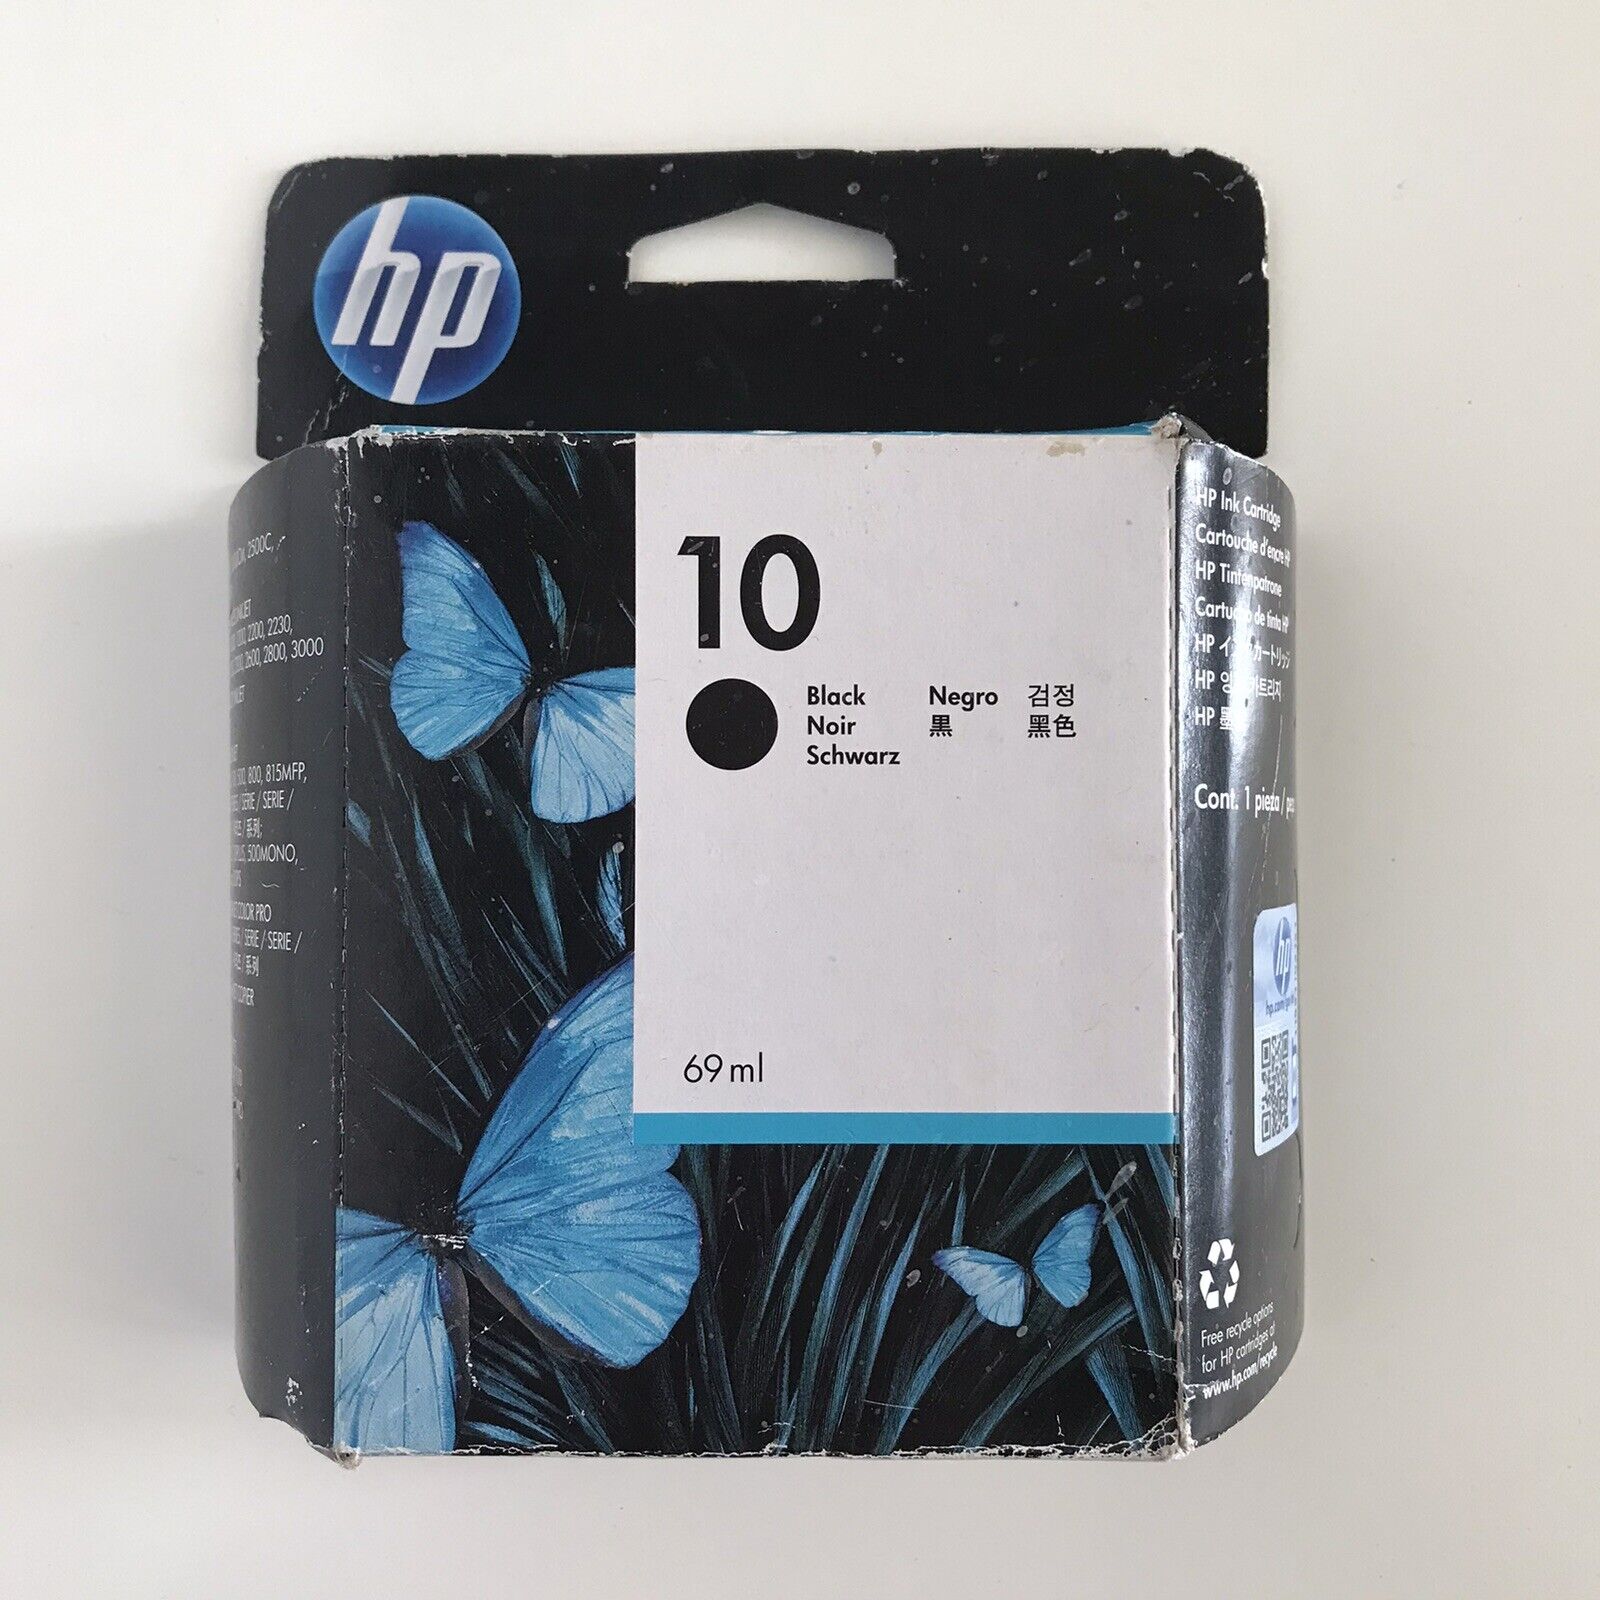 2012 HP 10 Black Ink Cartridge C4844A OfficeJet 9130 Genuine New Sealed Box OEM.